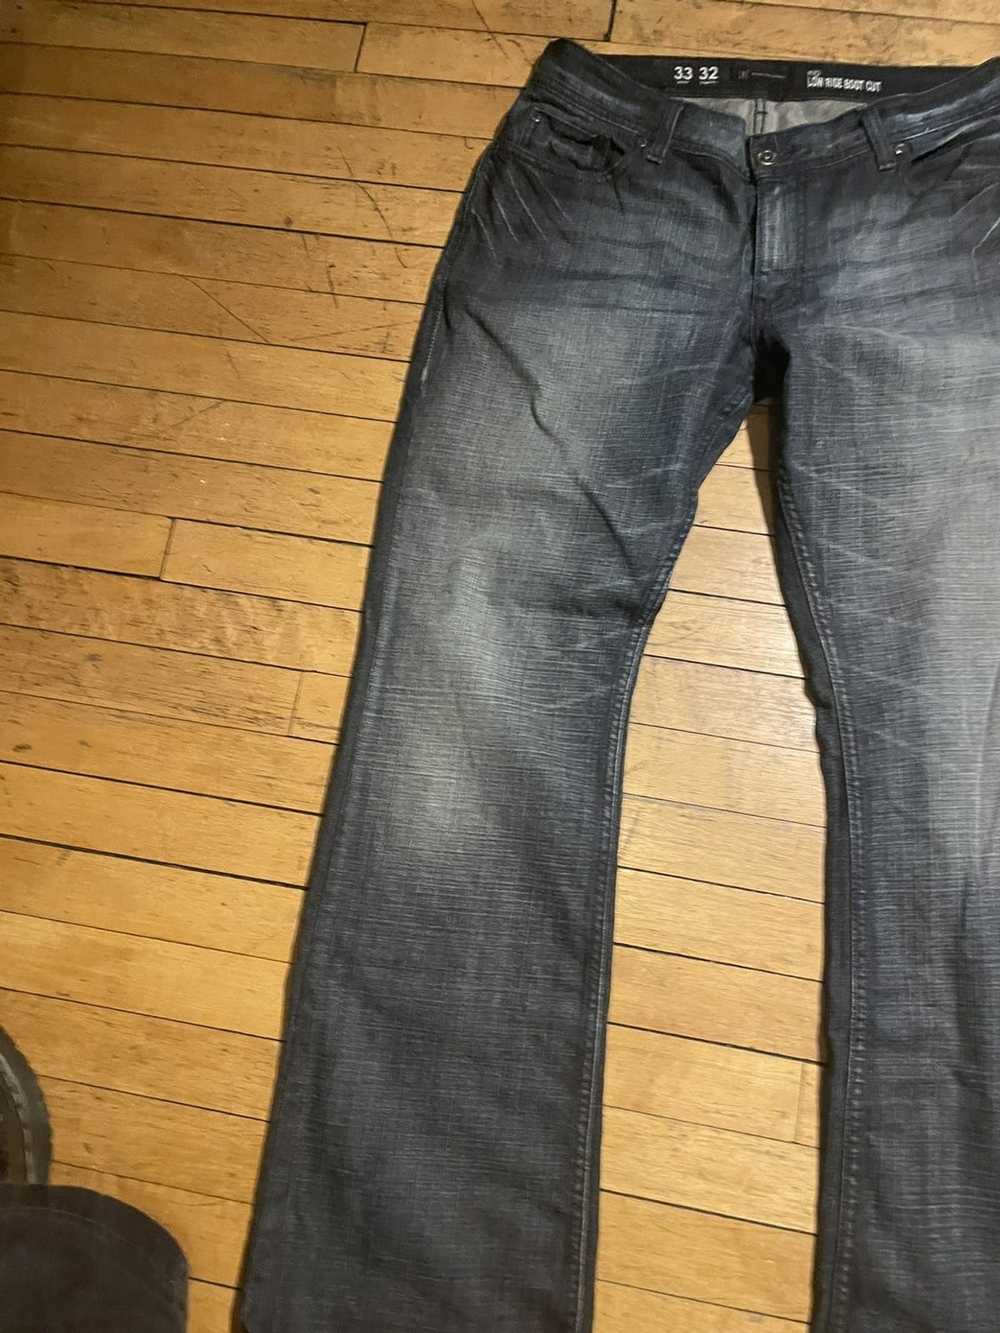 Streetwear low rise boot cut jeans - image 7